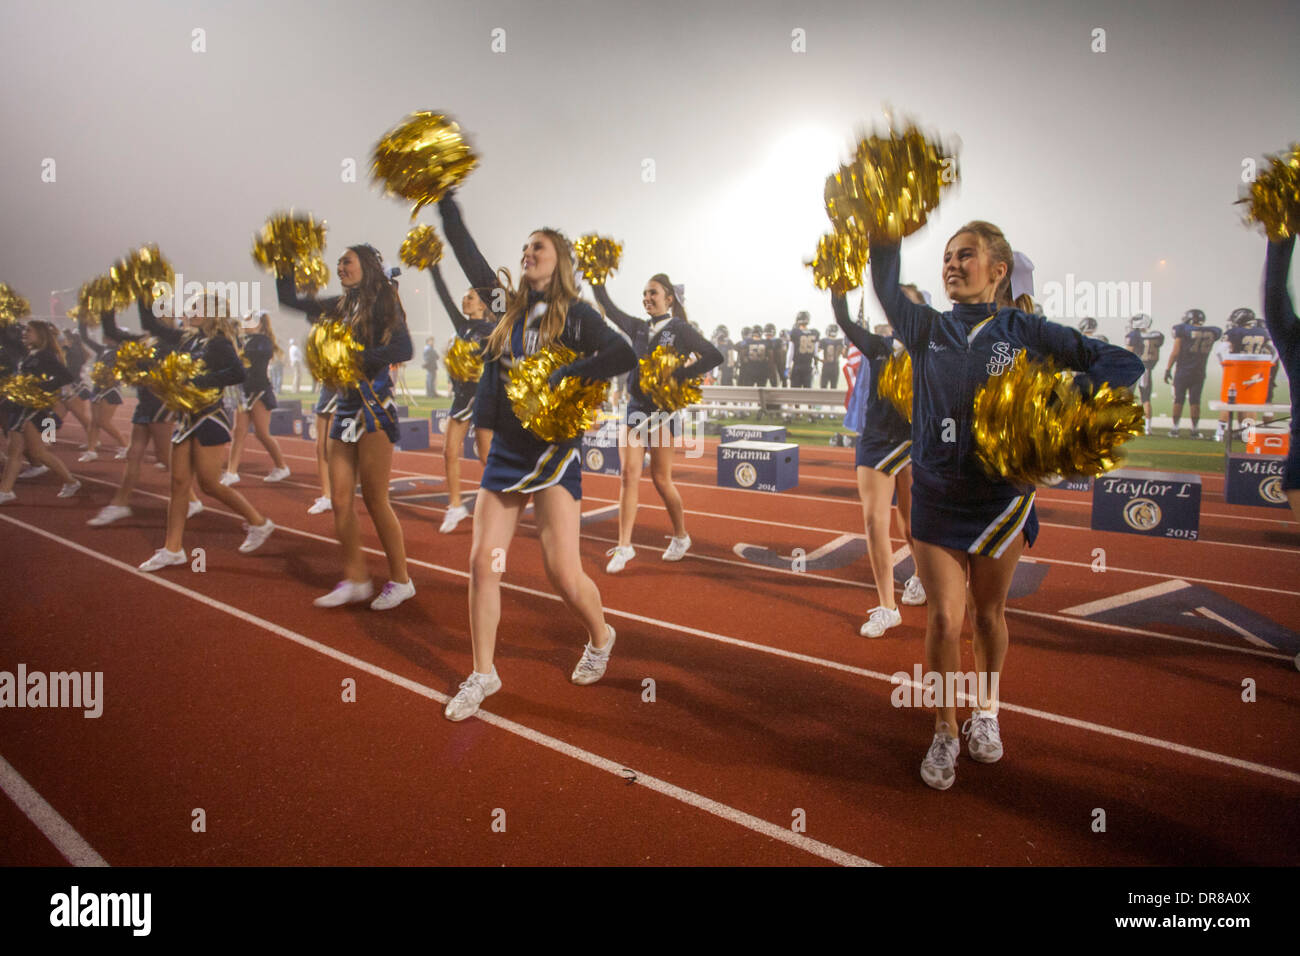 Cheerleaders entertain the spectators at a high school night football game in San Juan Capistrano, CA. Stock Photo